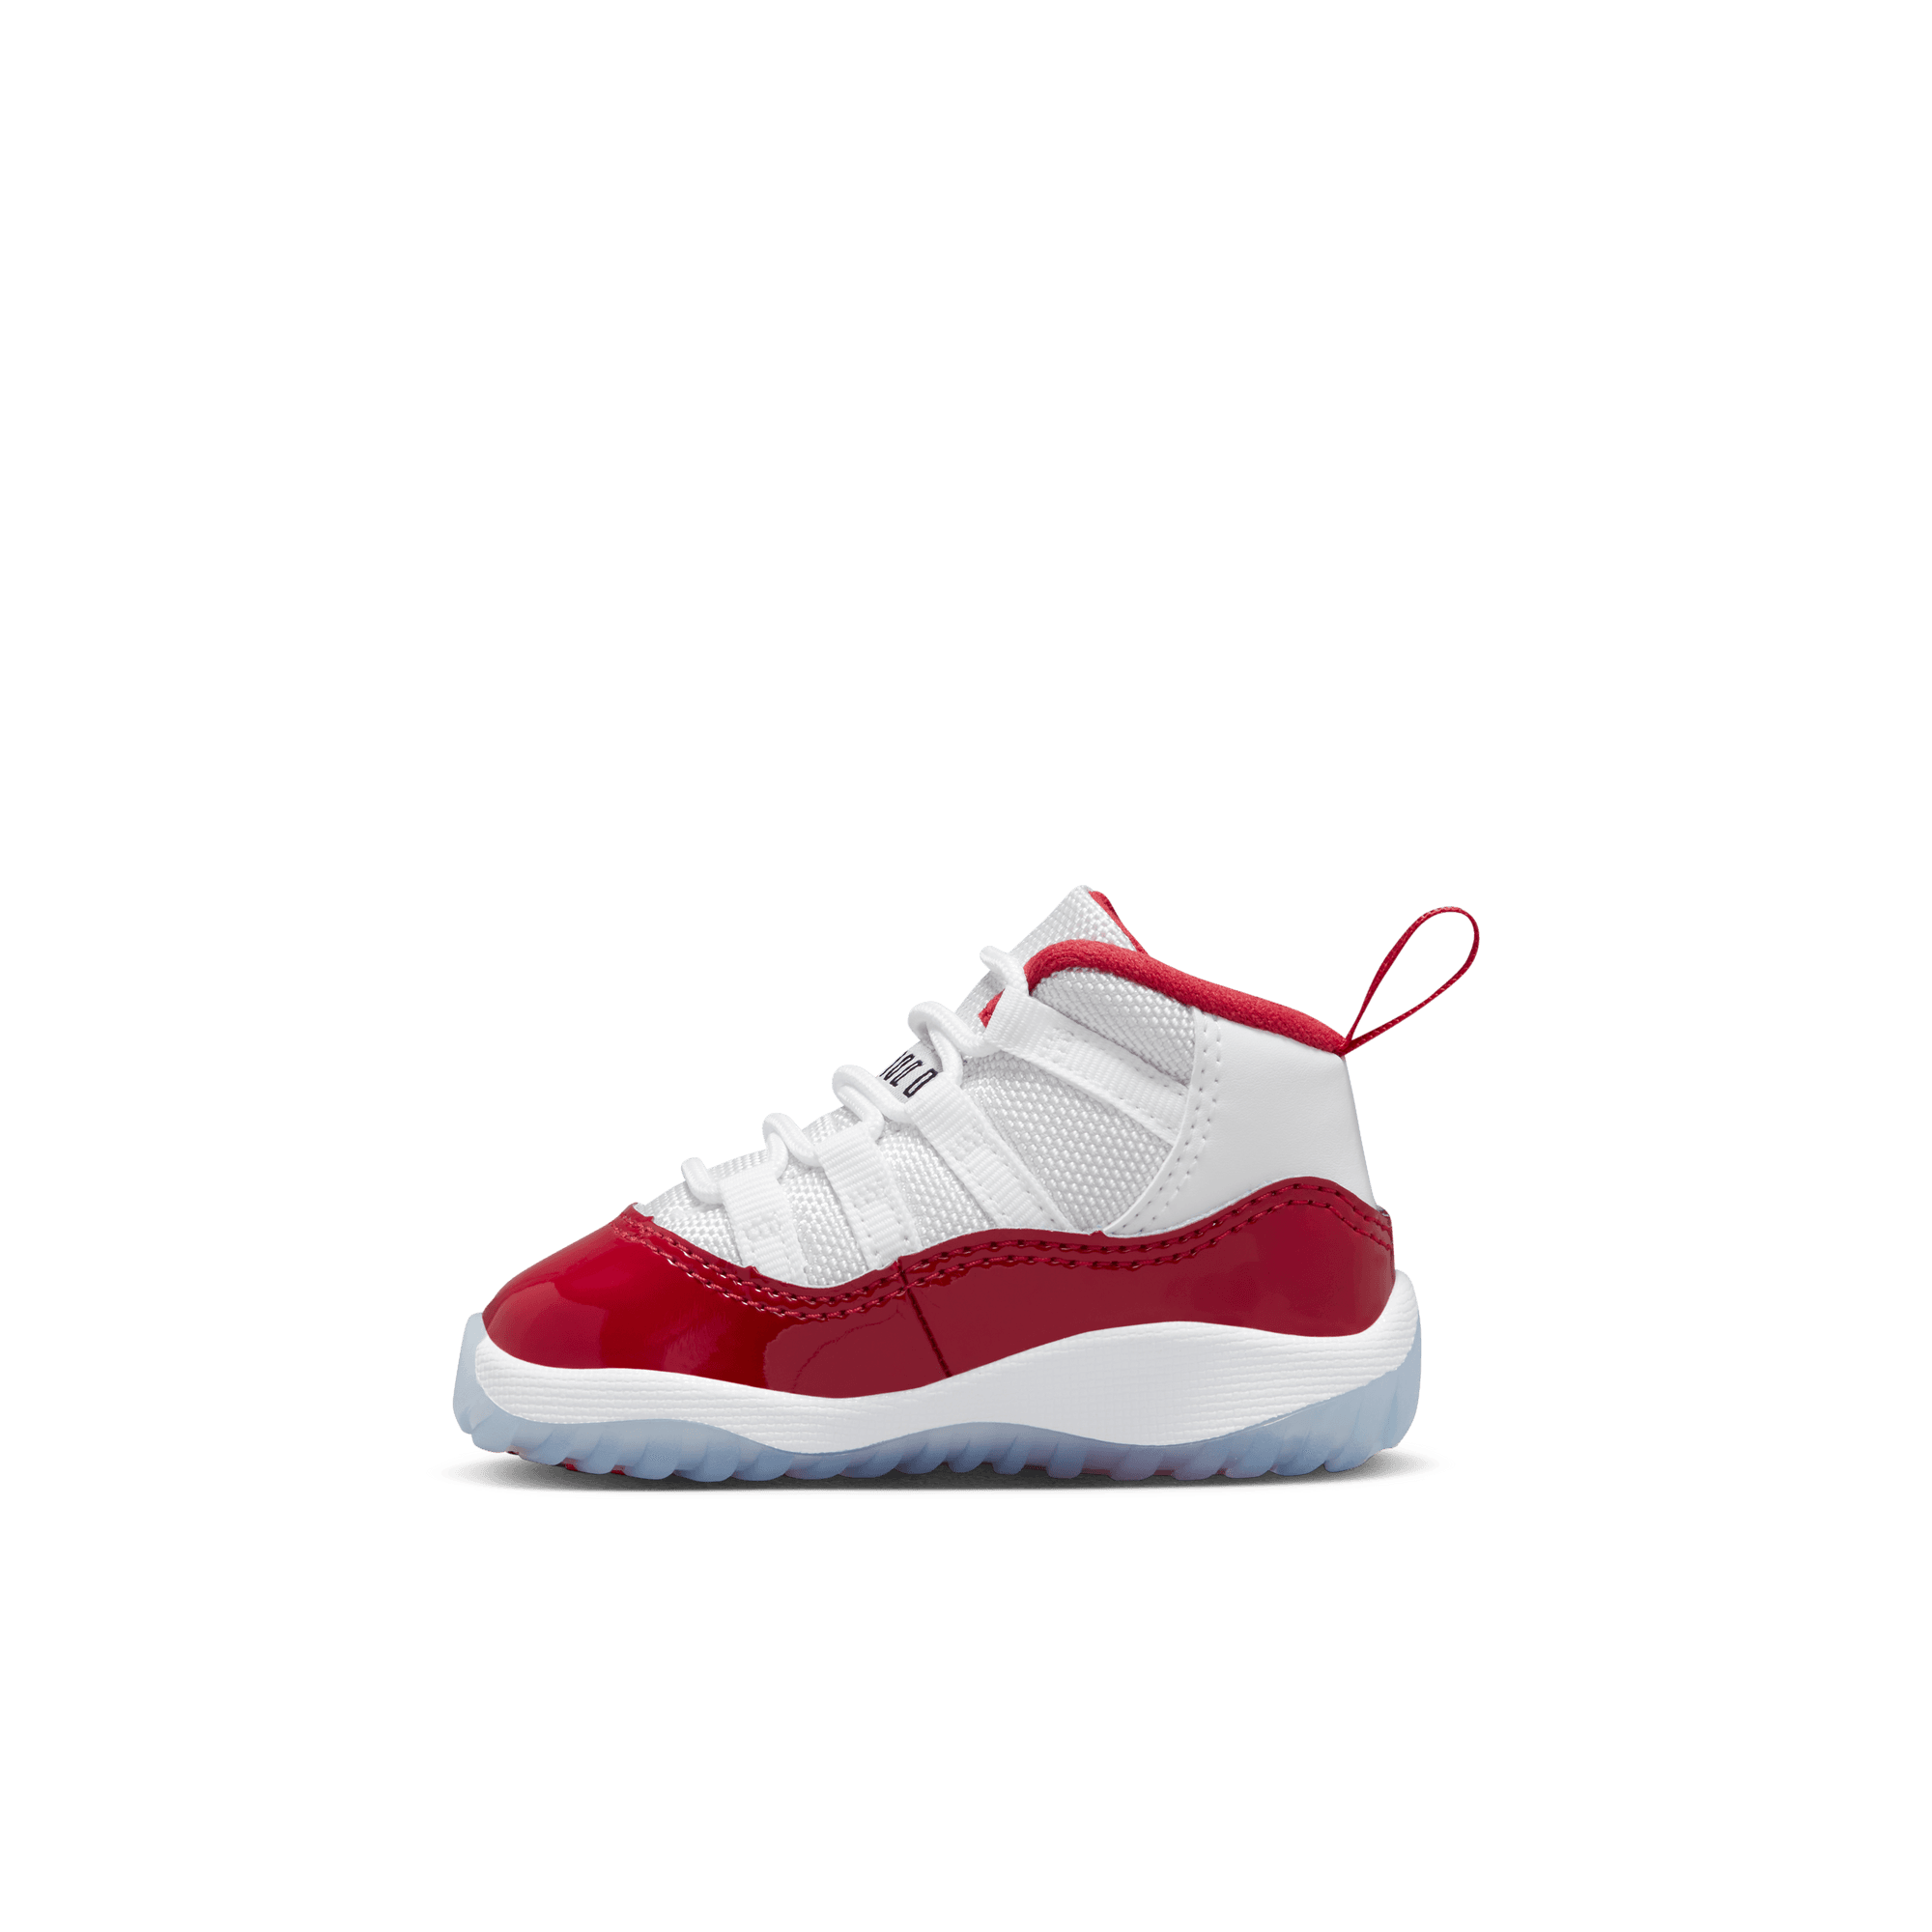 Air Jordan 11 Cherry - Toddler's GBNY